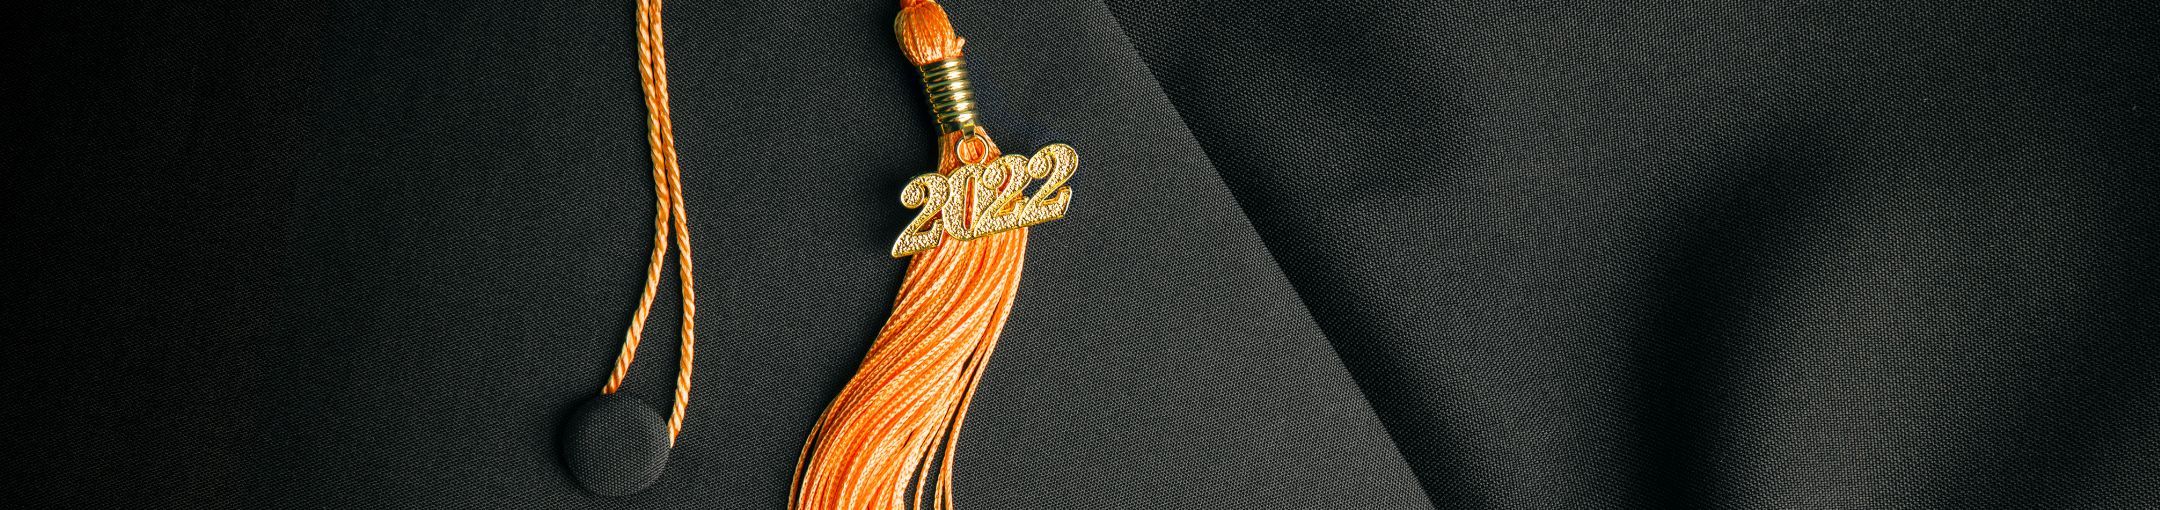 A graduation cap tassel with 2022 on it.